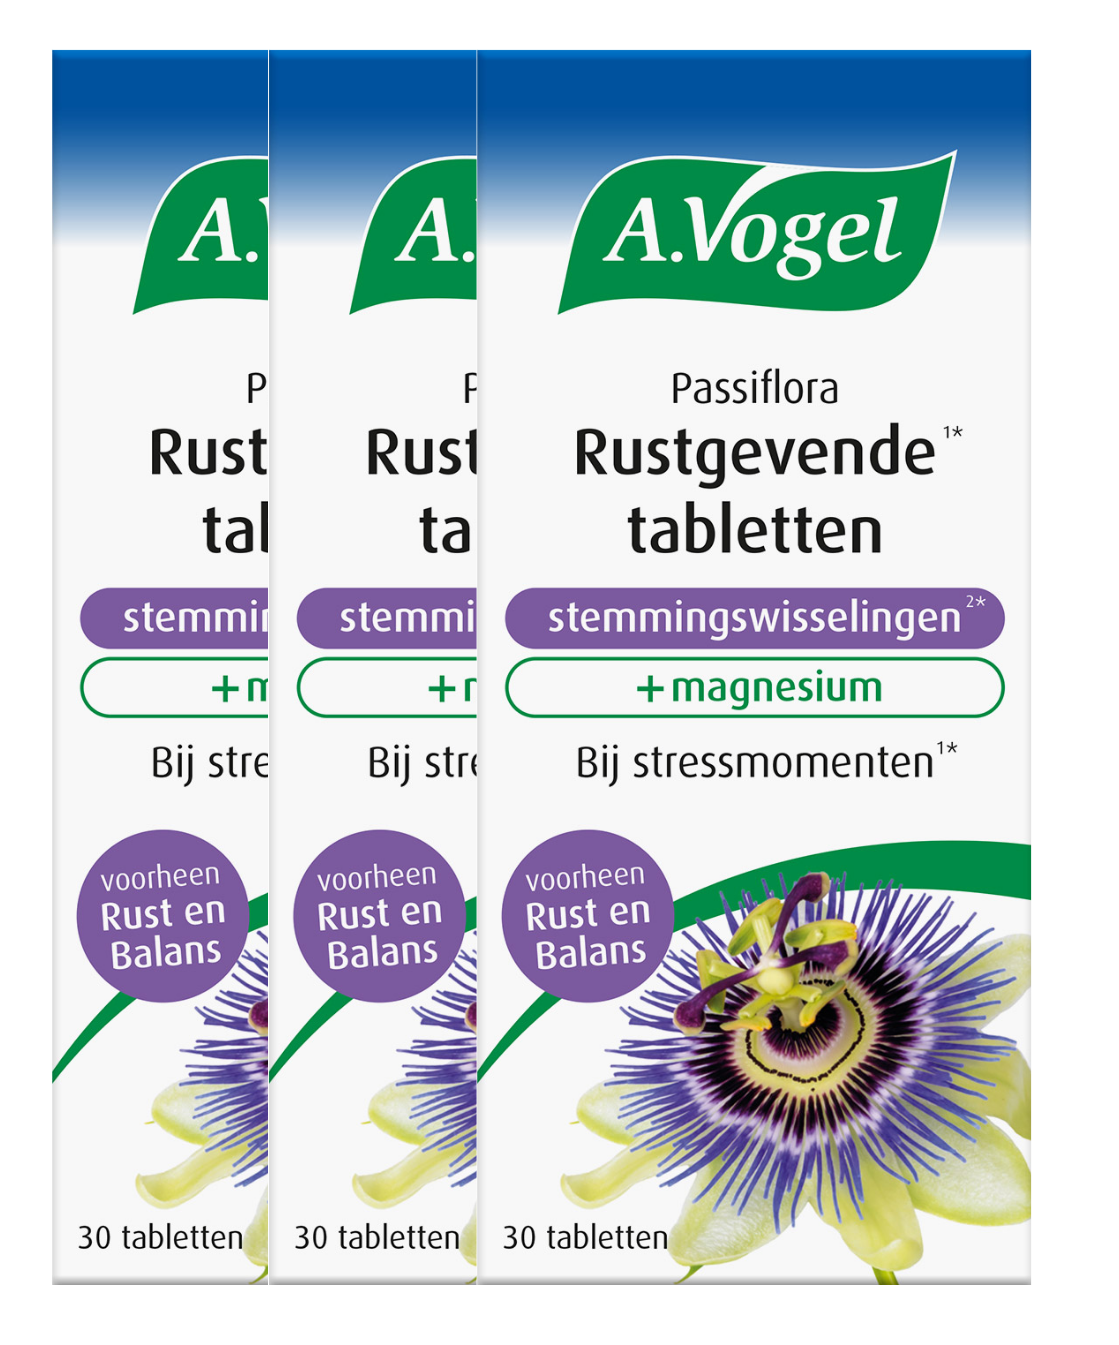 A.Vogel Passiflora Rustgevende * Tabletten Stemmingswisselingen * Multiverpakking